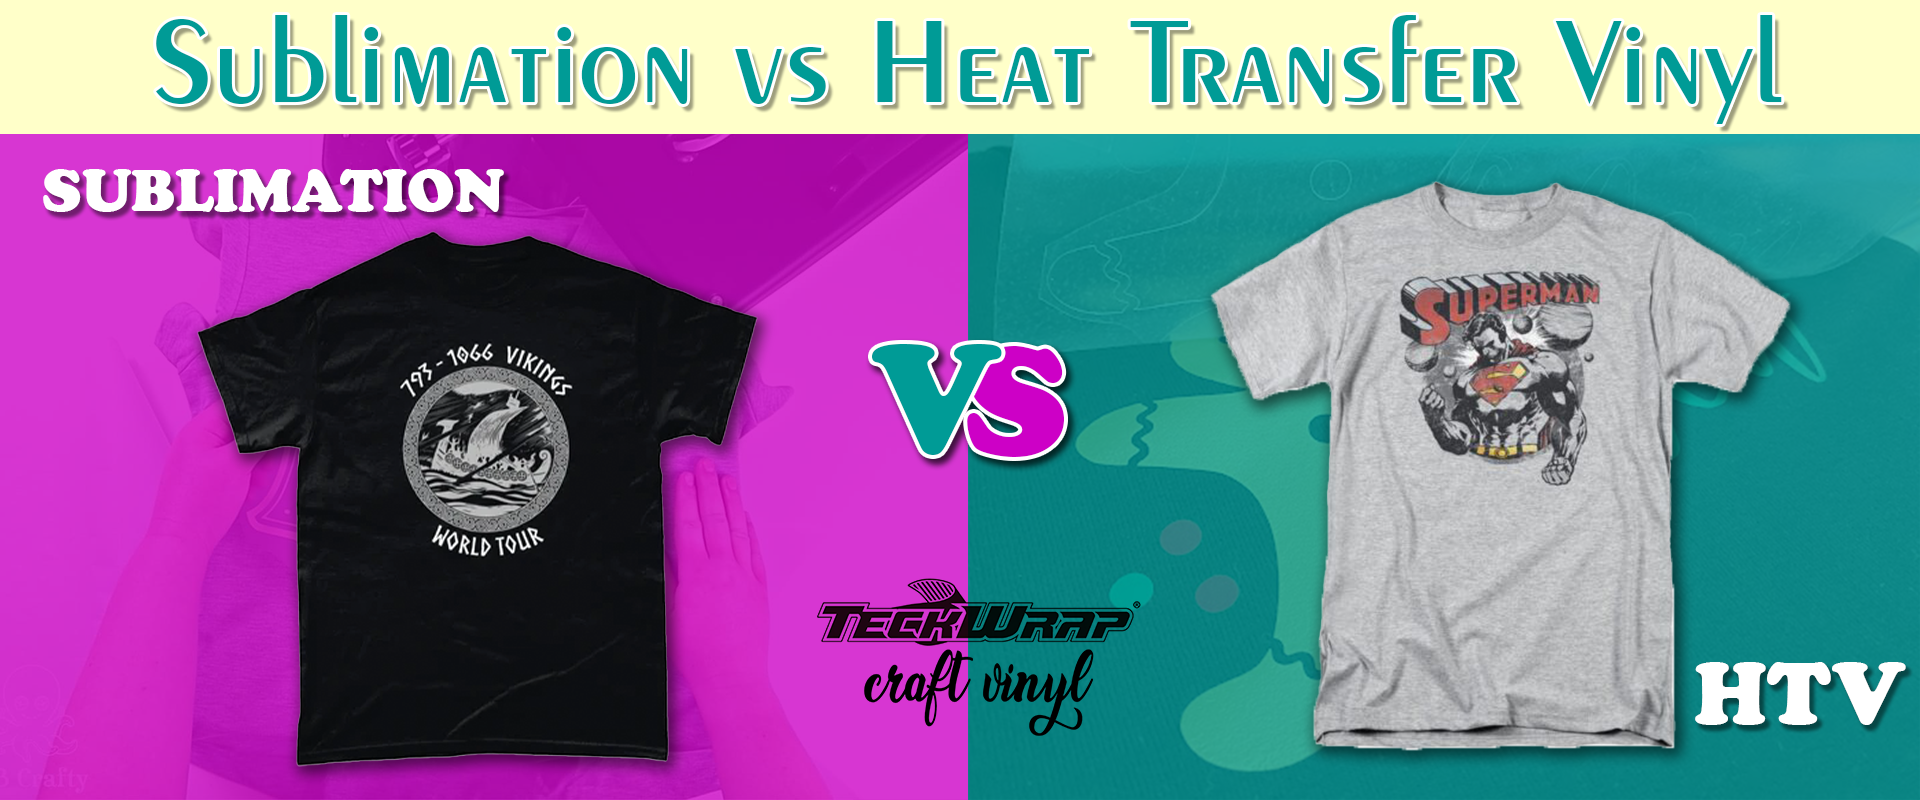 Heat Transfer Vinyl (HTV) vs Sublimation Printing